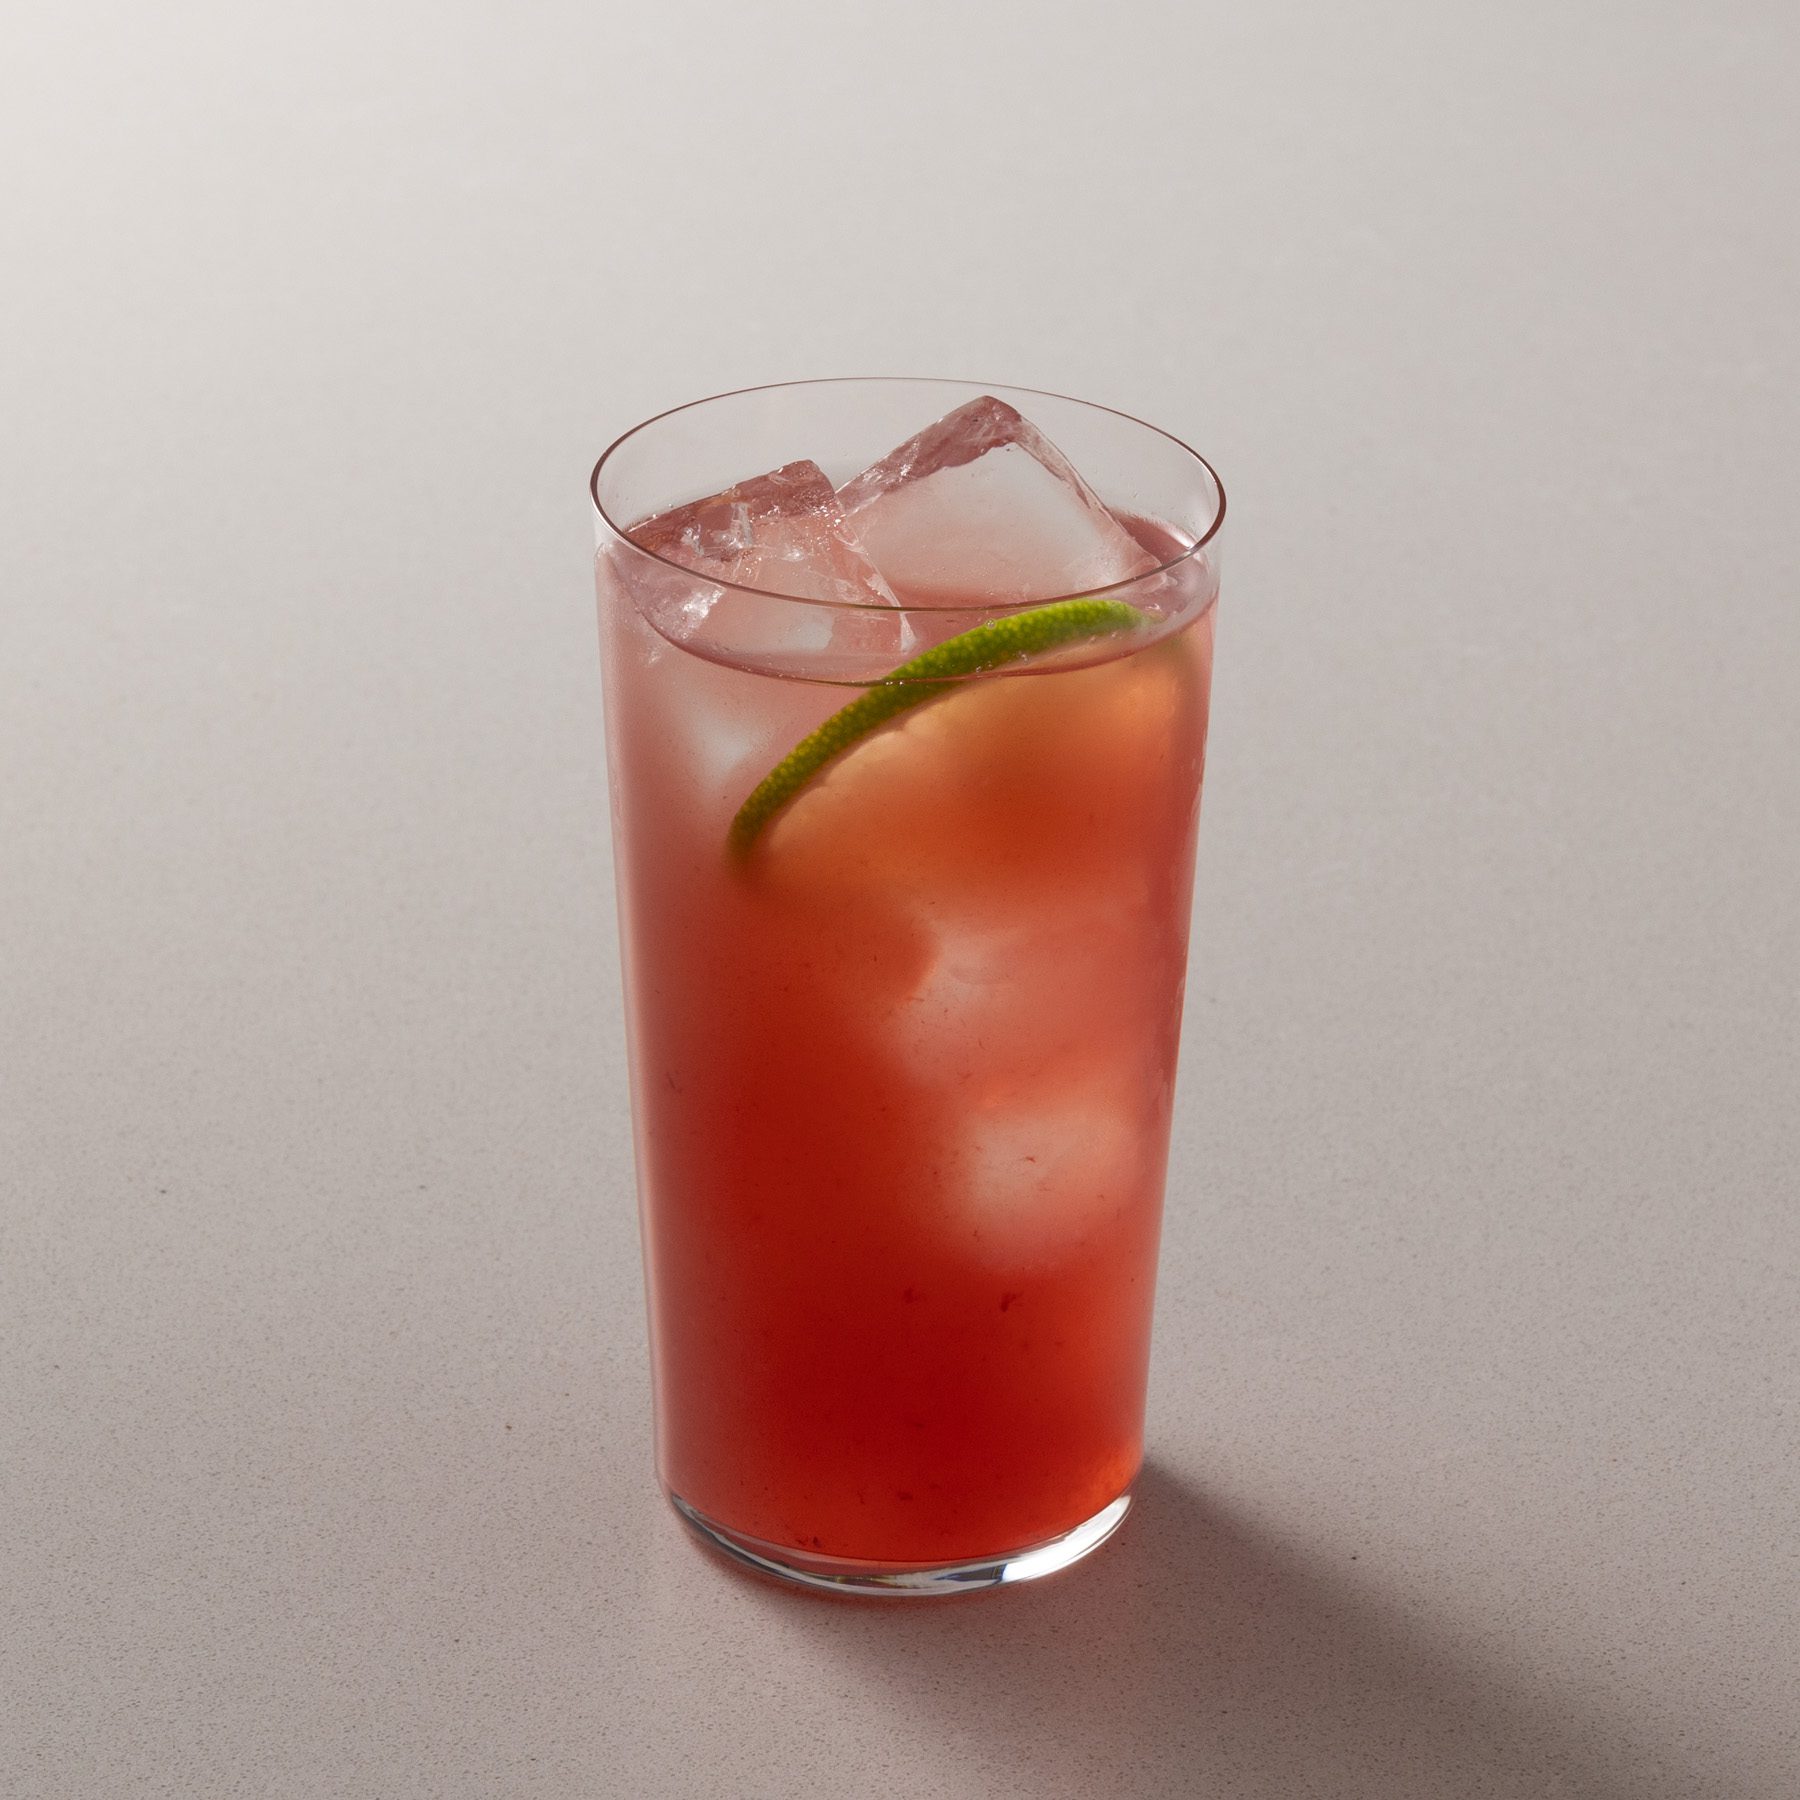 Seabreeze cocktail